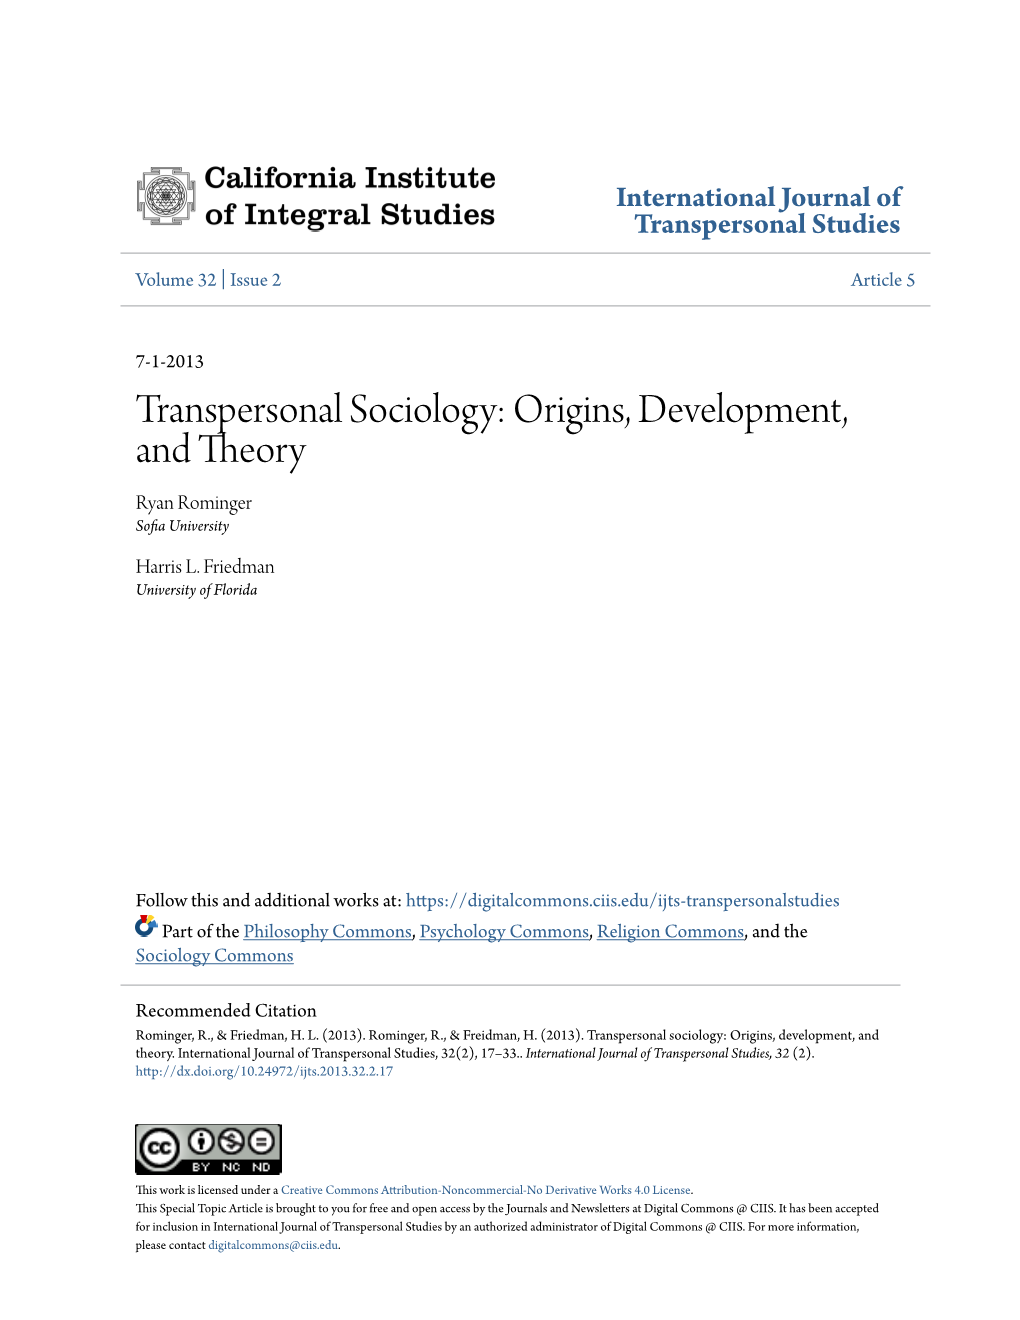 Transpersonal Sociology: Origins, Development, and Theory Ryan Rominger Sofia University